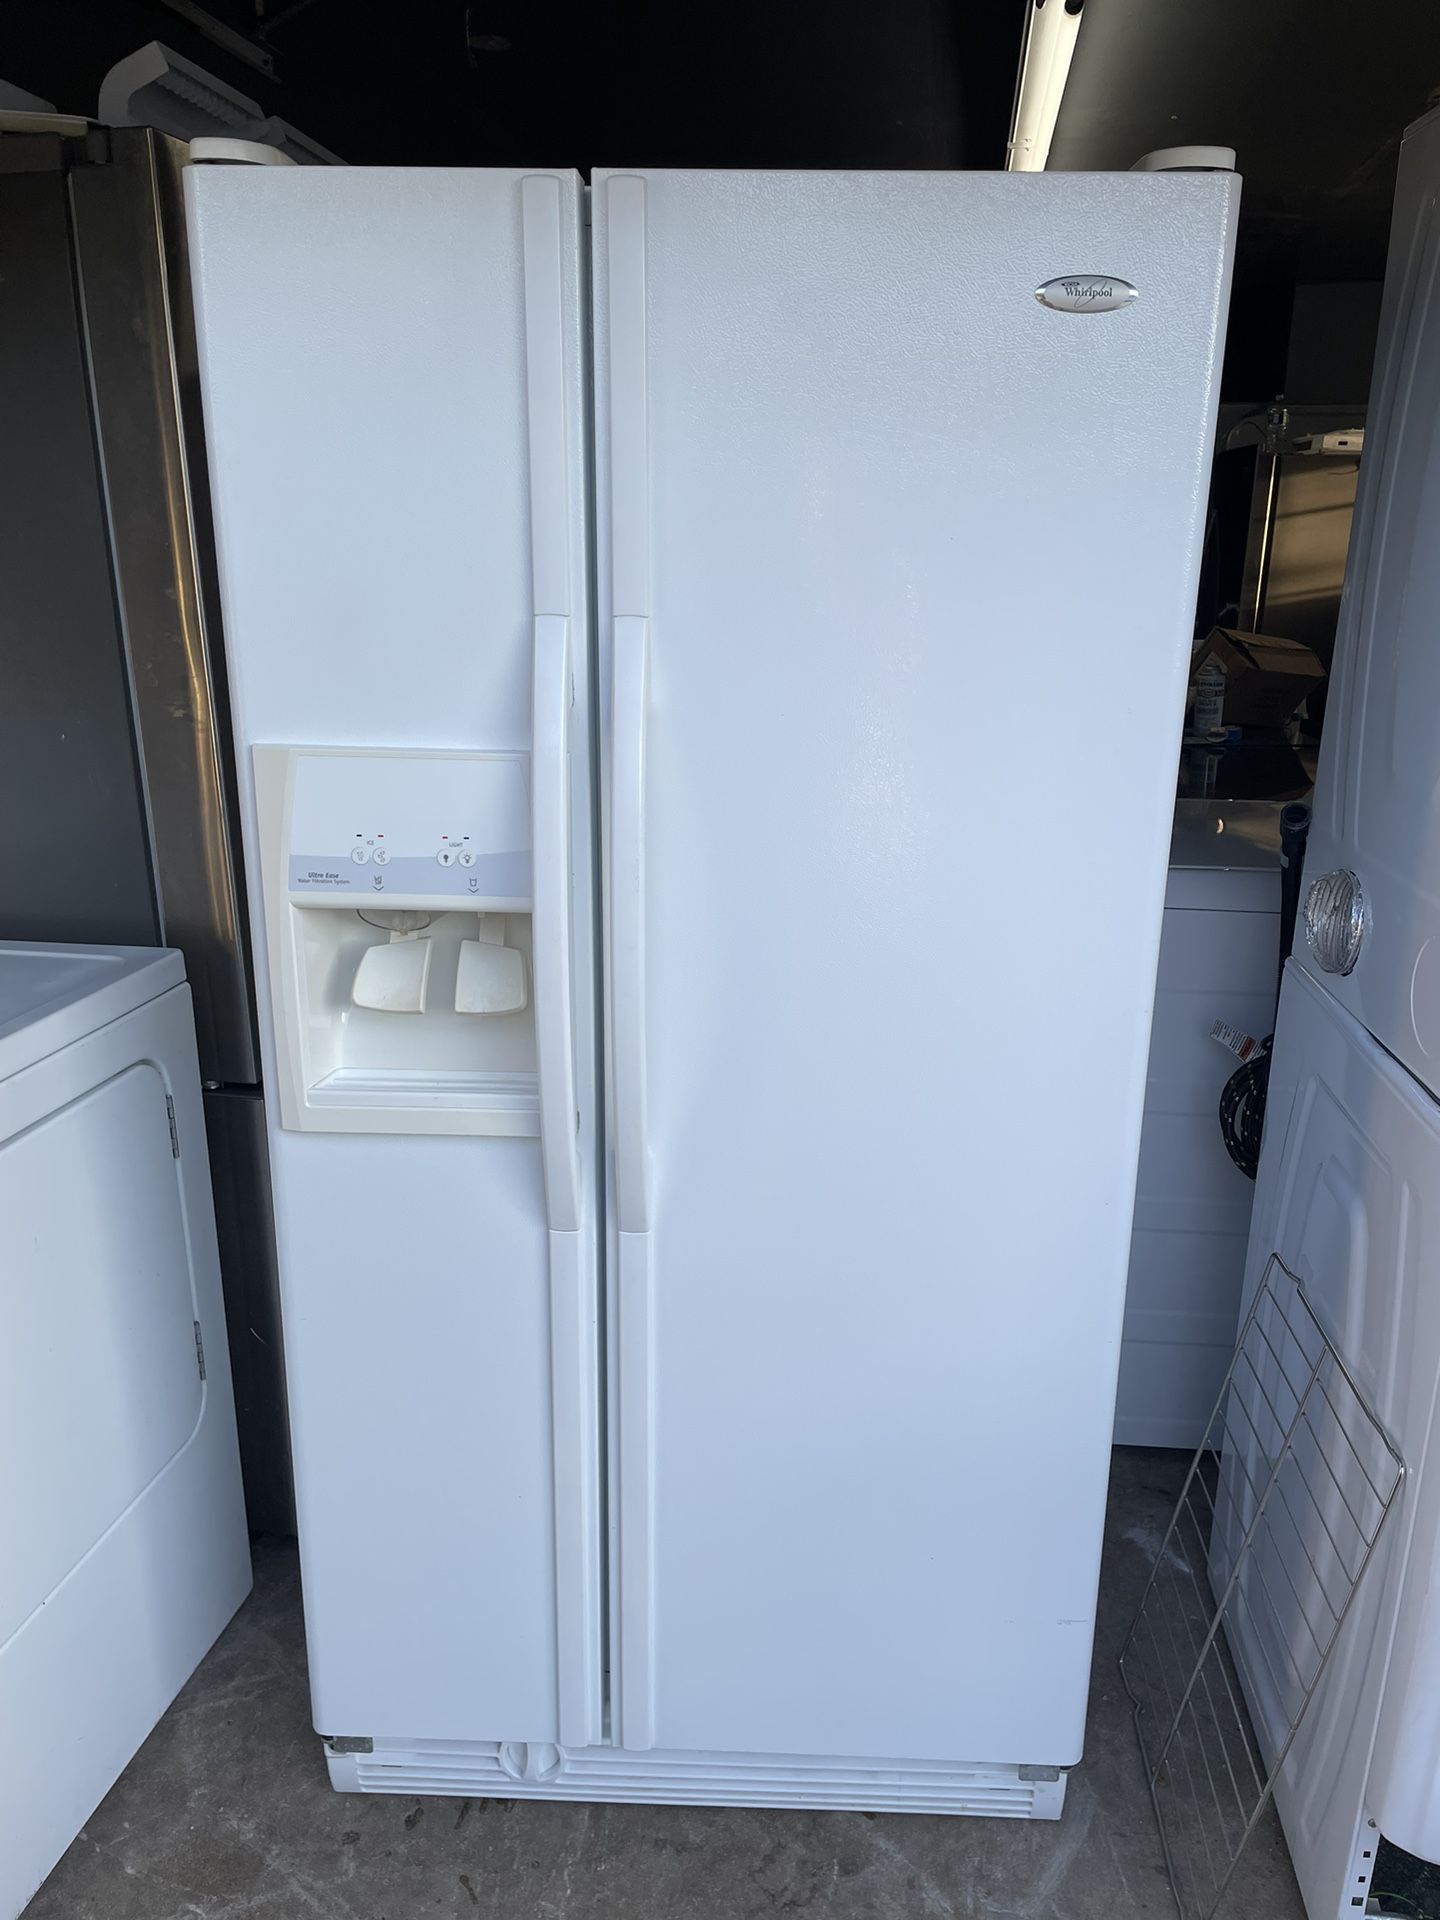 Whirlpool Refrigerator 33”W  66”H Everything Works Good